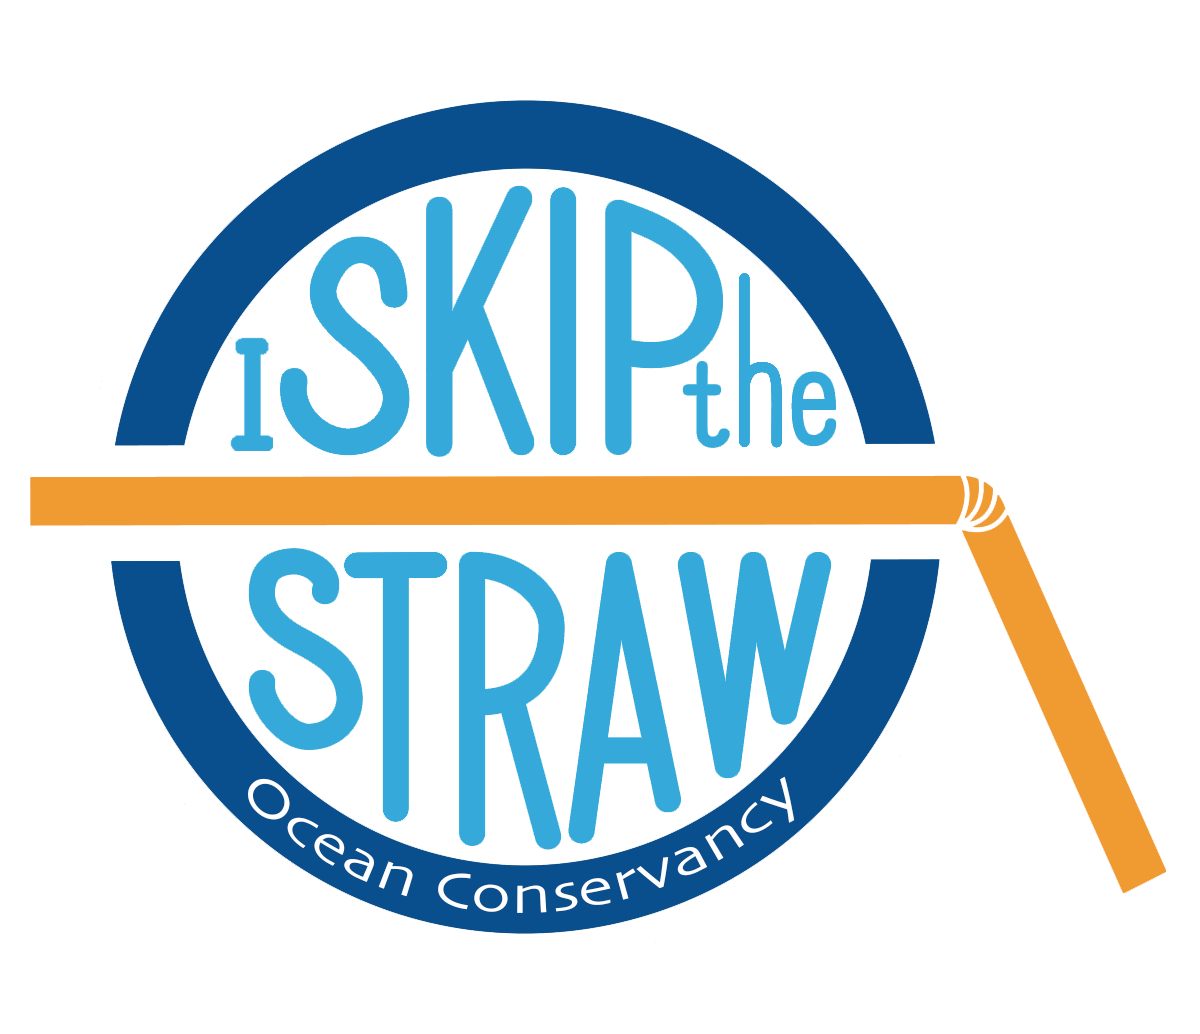 Take the Pledge - Skip the Straw